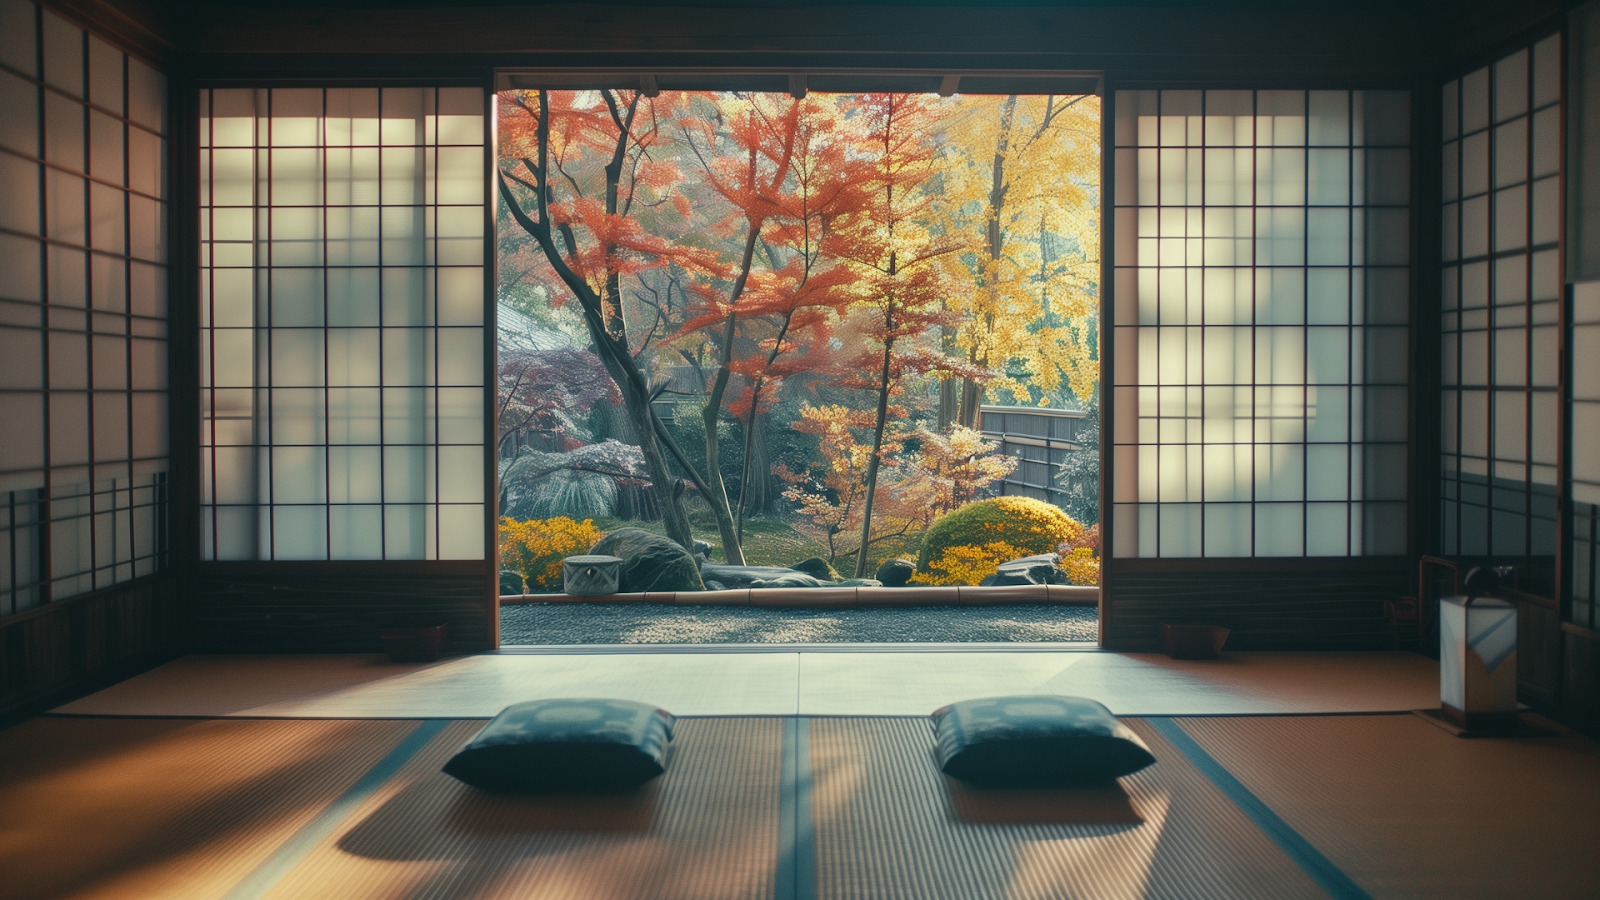 Inside a traditional Japanese ryokan, overlooking a serene Zen garden in autumn.